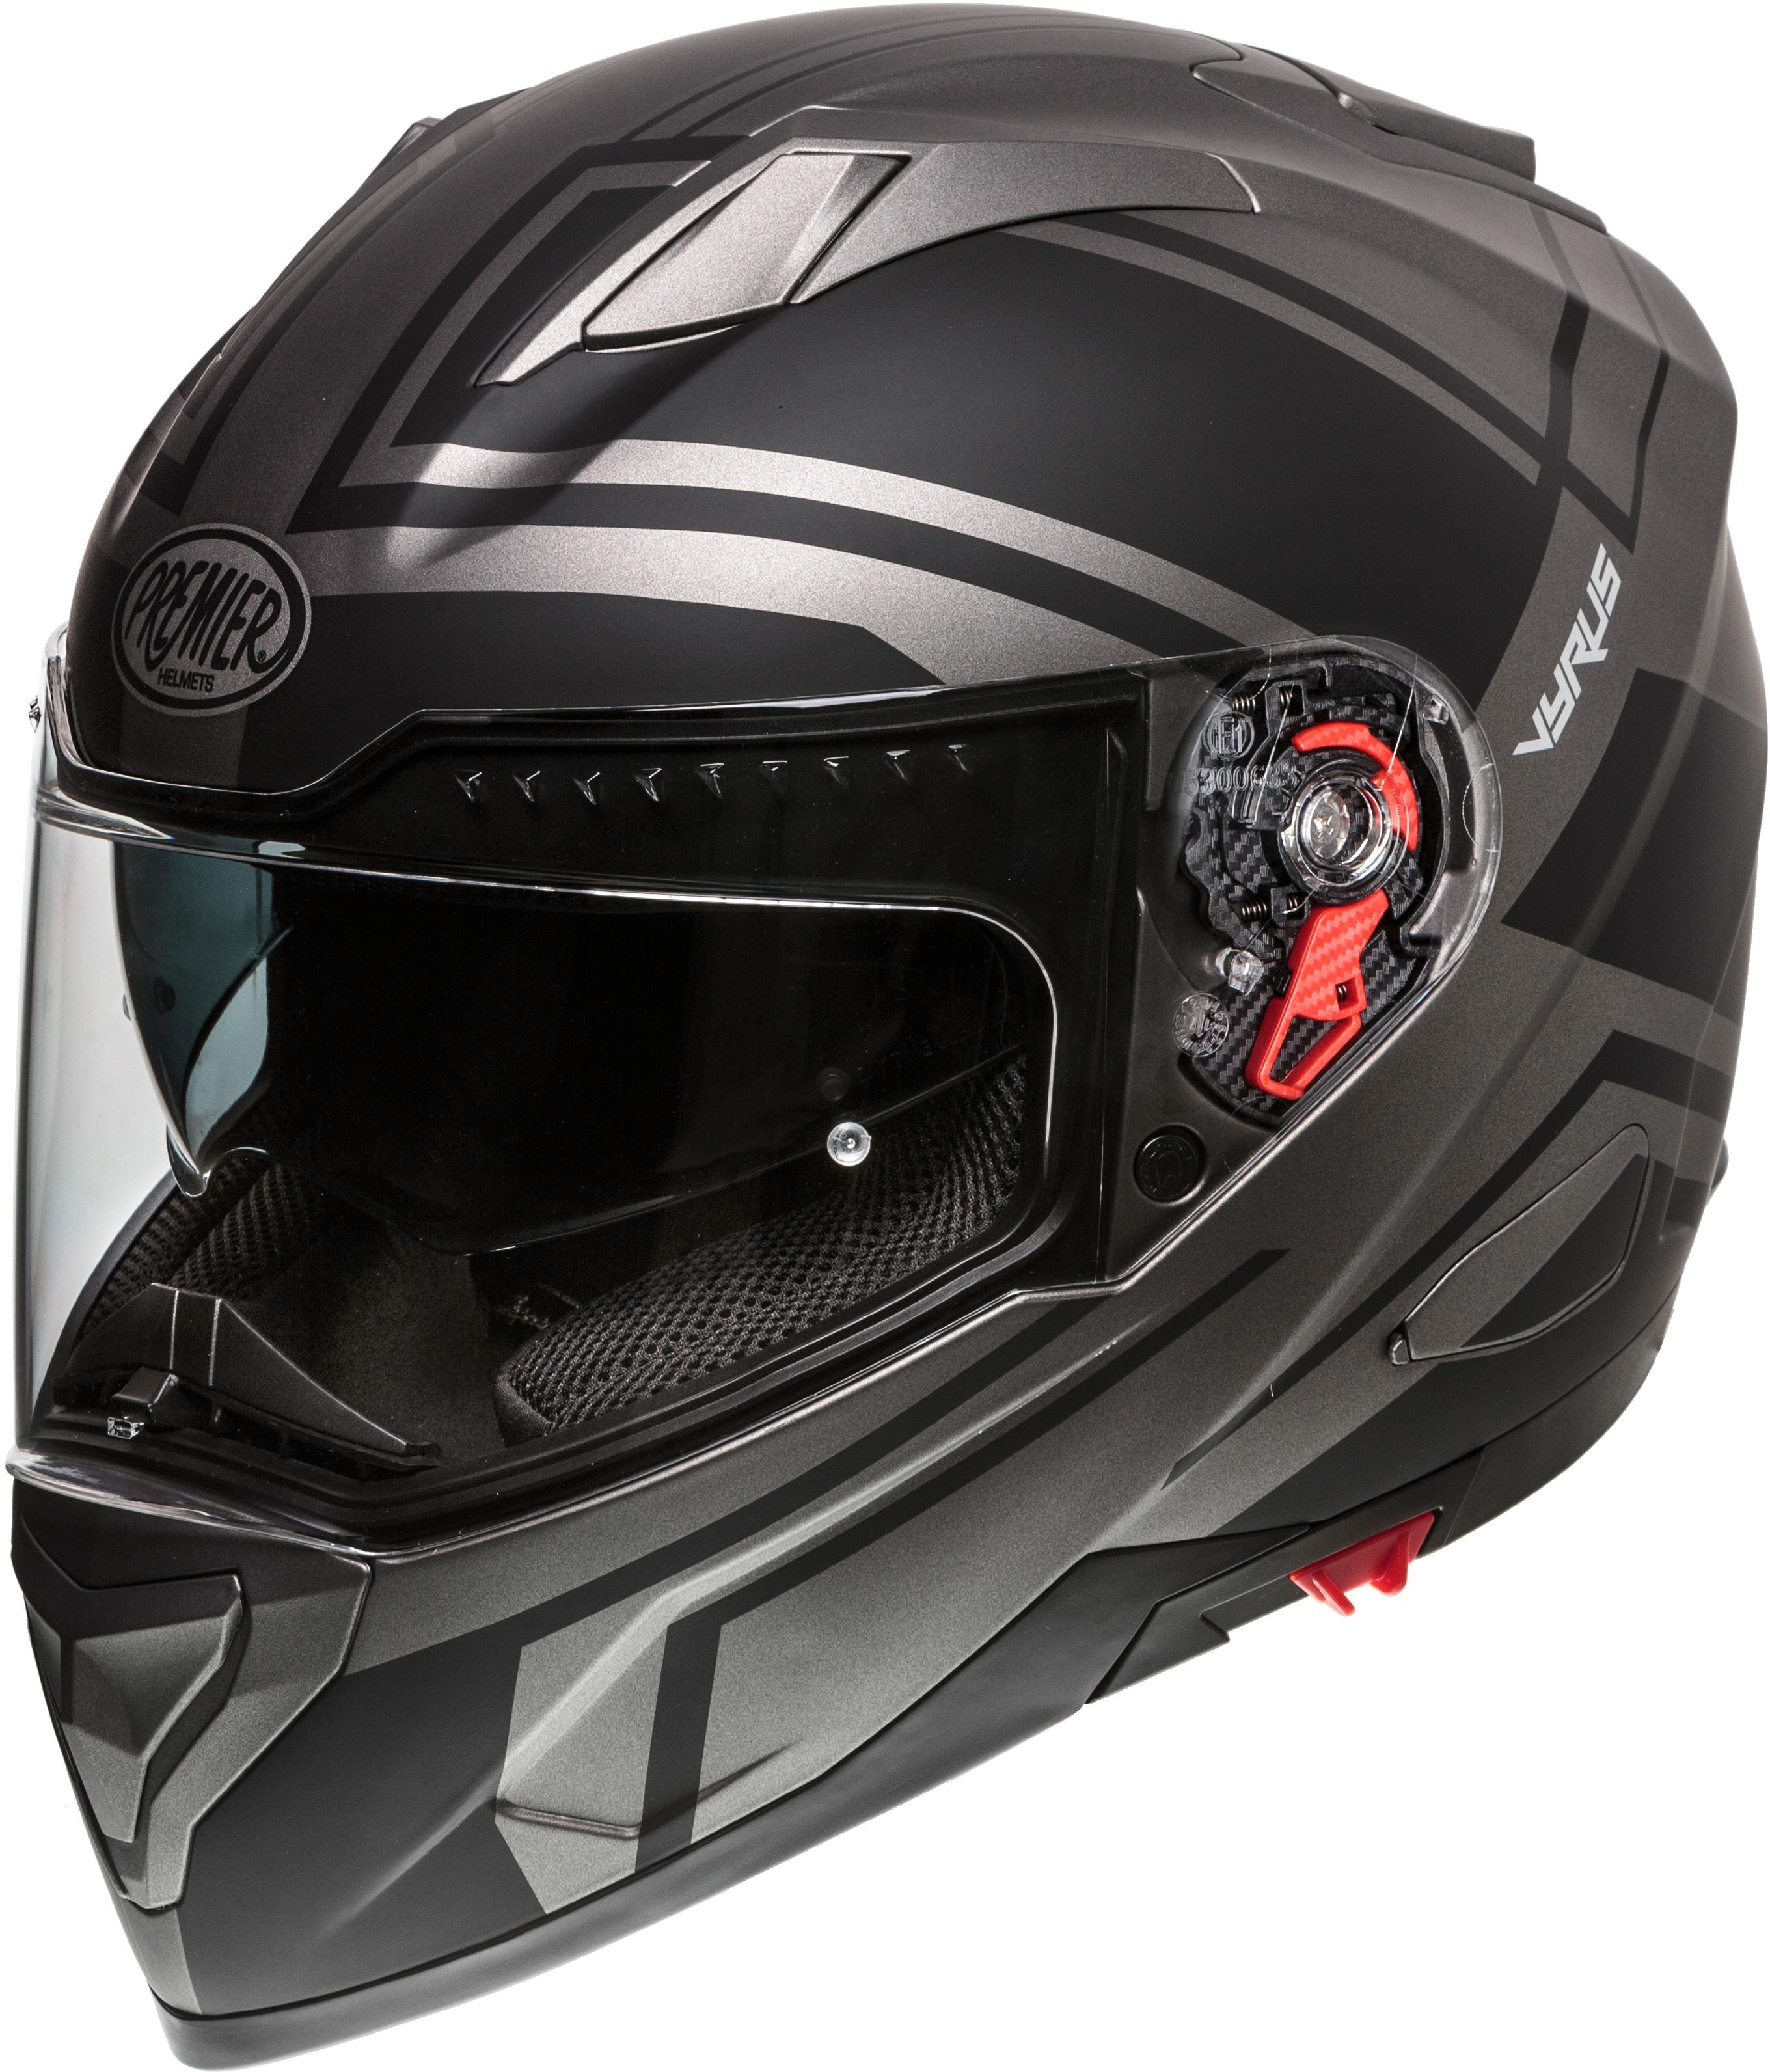 Premier Vyrus Helmet Black/Gun Matt - Extra Large